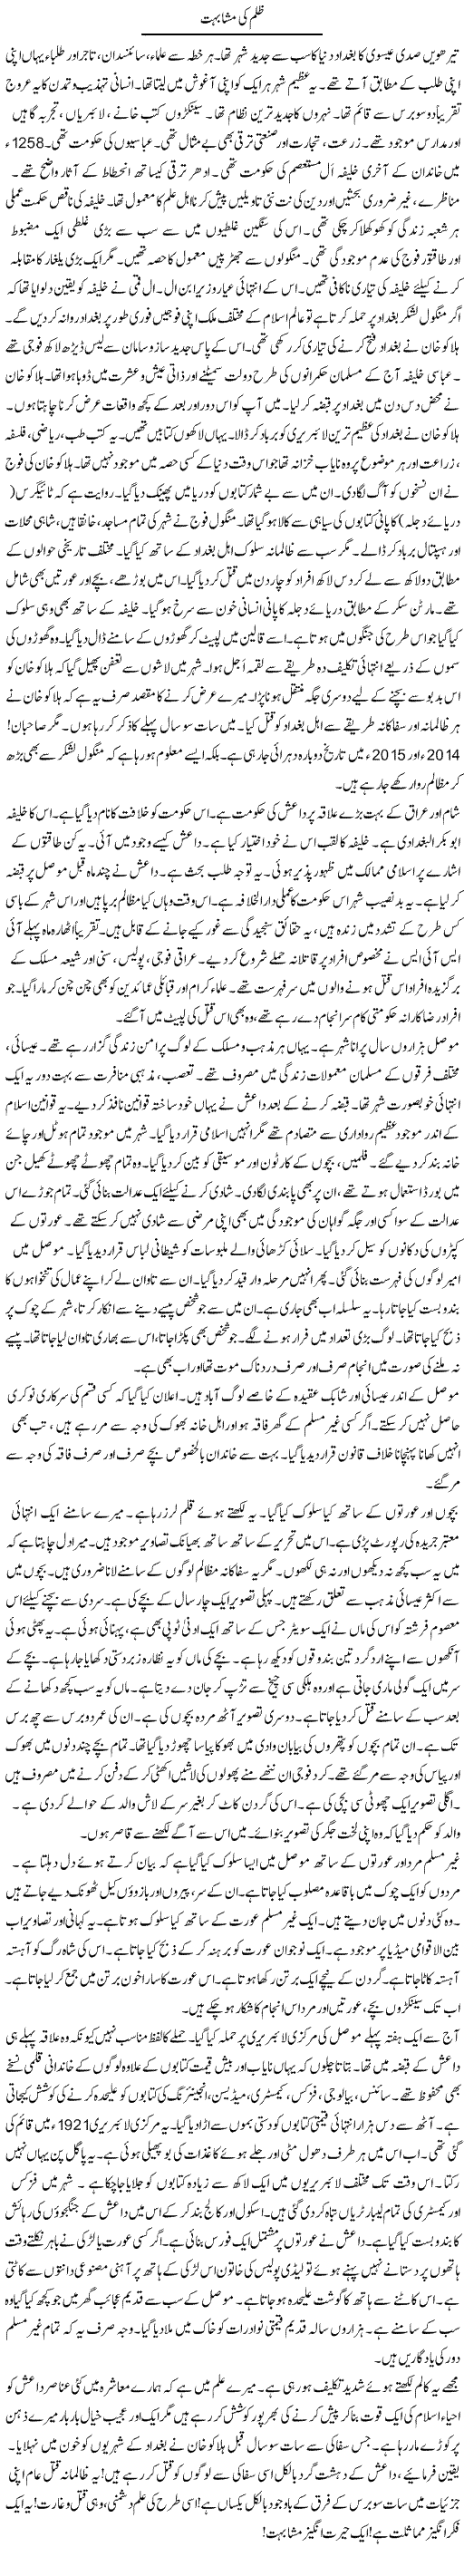 Zulm Ki Mushabihat | Rao Manzar Hayat | Daily Urdu Columns